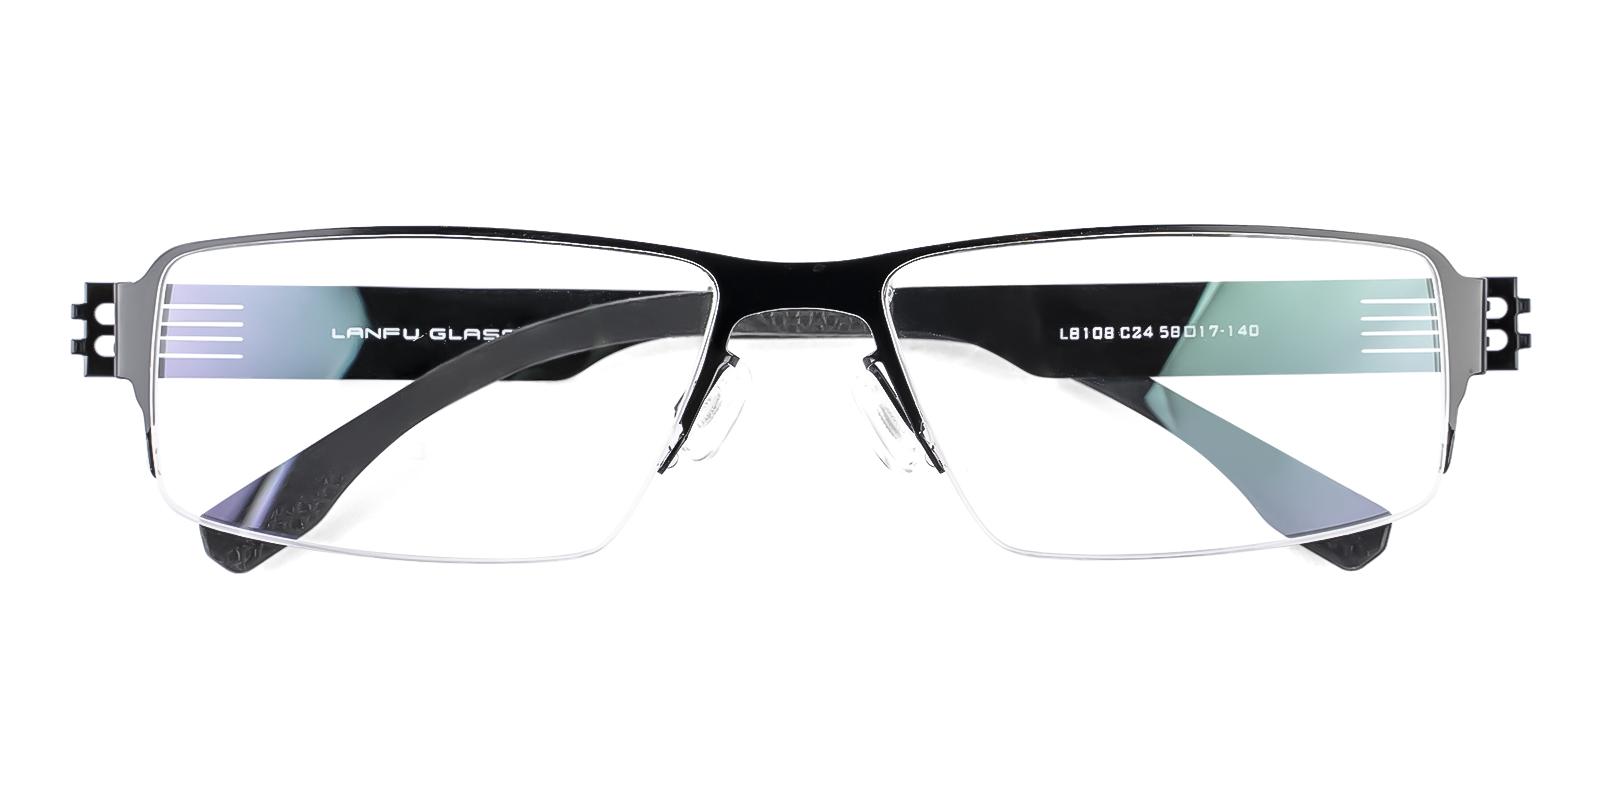 Exterly Black Metal Eyeglasses , NosePads , SpringHinges Frames from ABBE Glasses